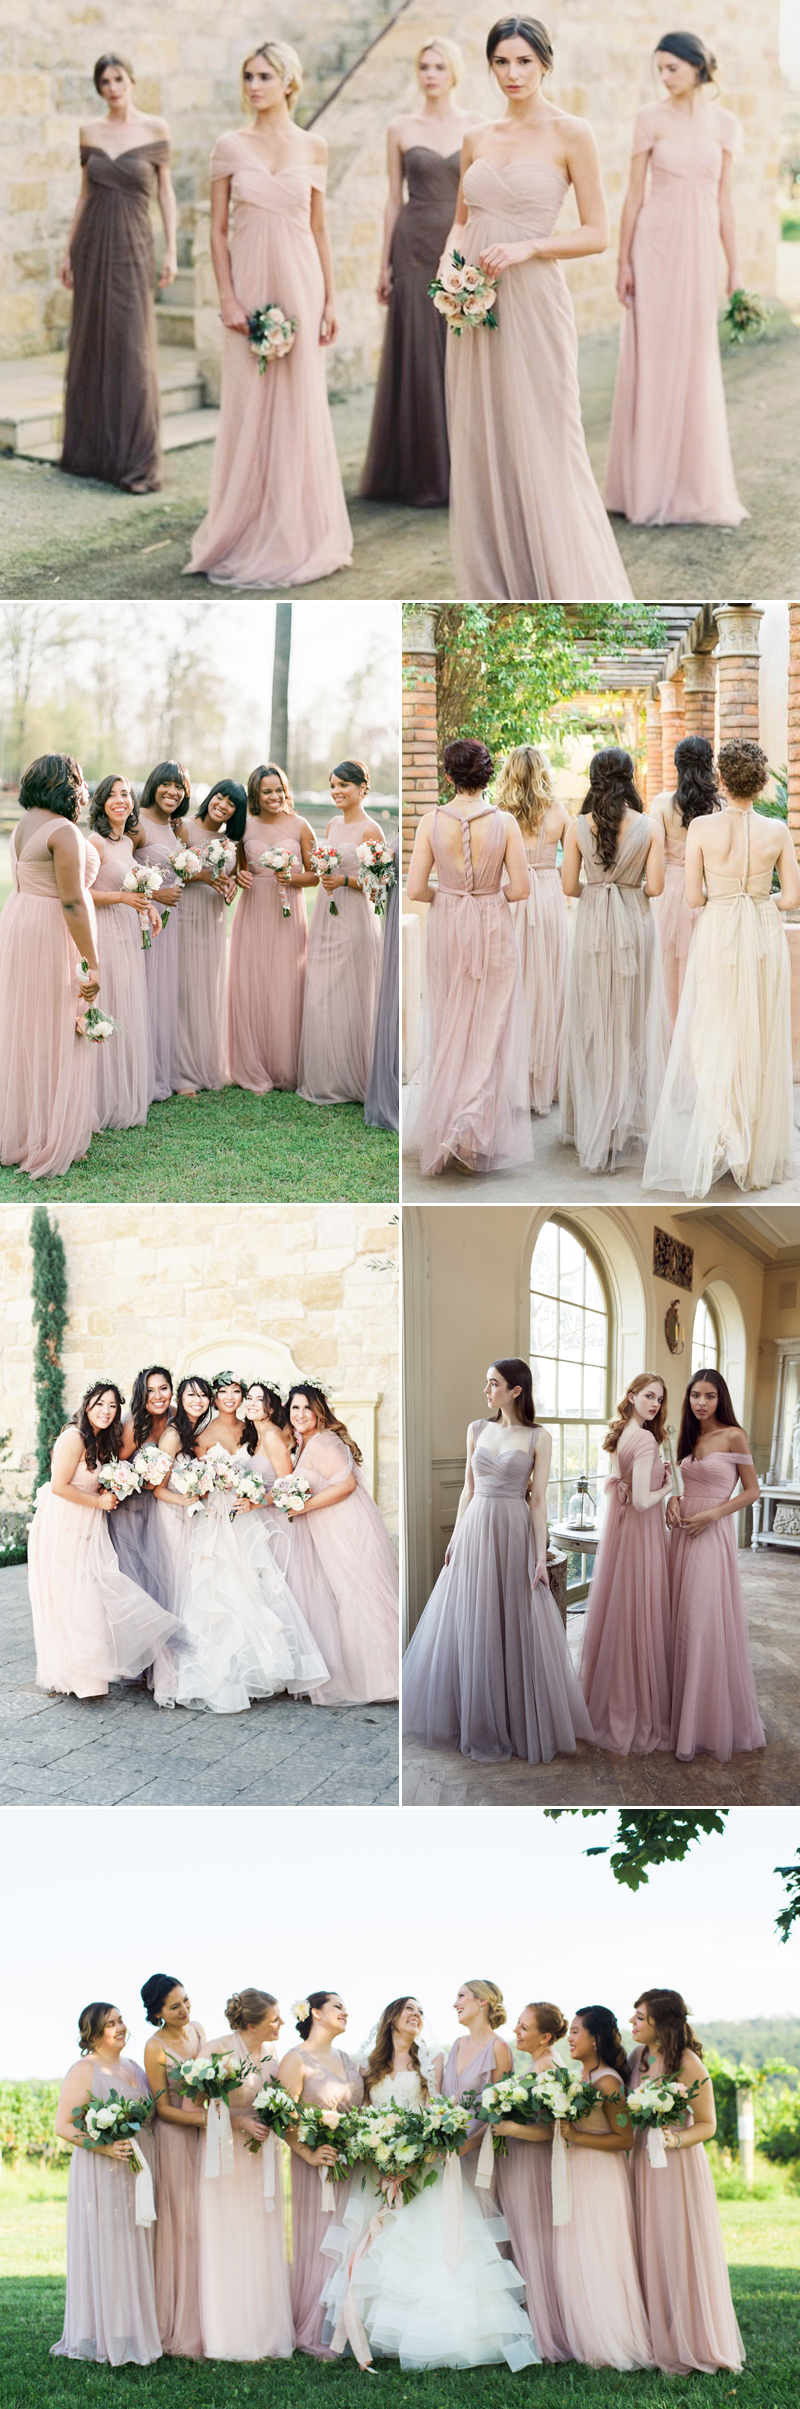 mismatched-bridesmaiddress03-neutral-pink